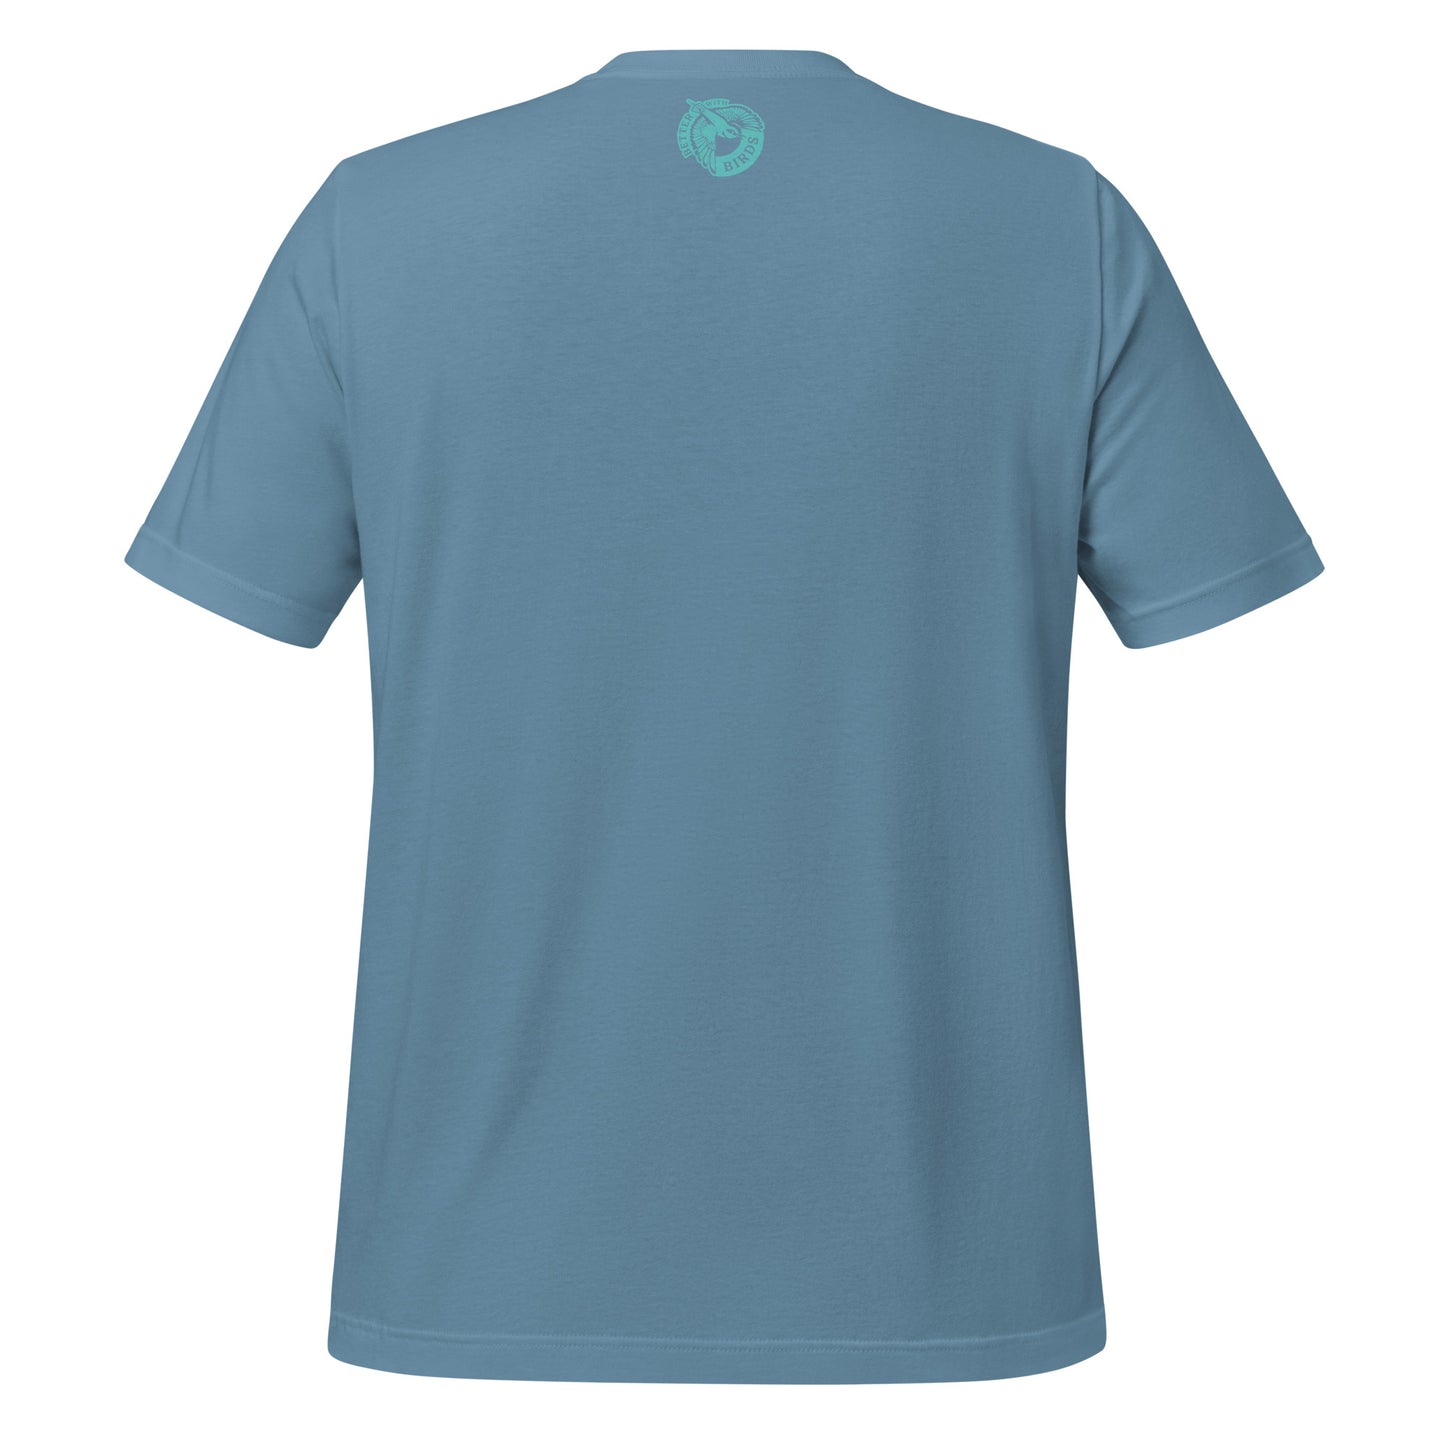 Atlantic Puffins Lightweight Cotton Unisex T-Shirt